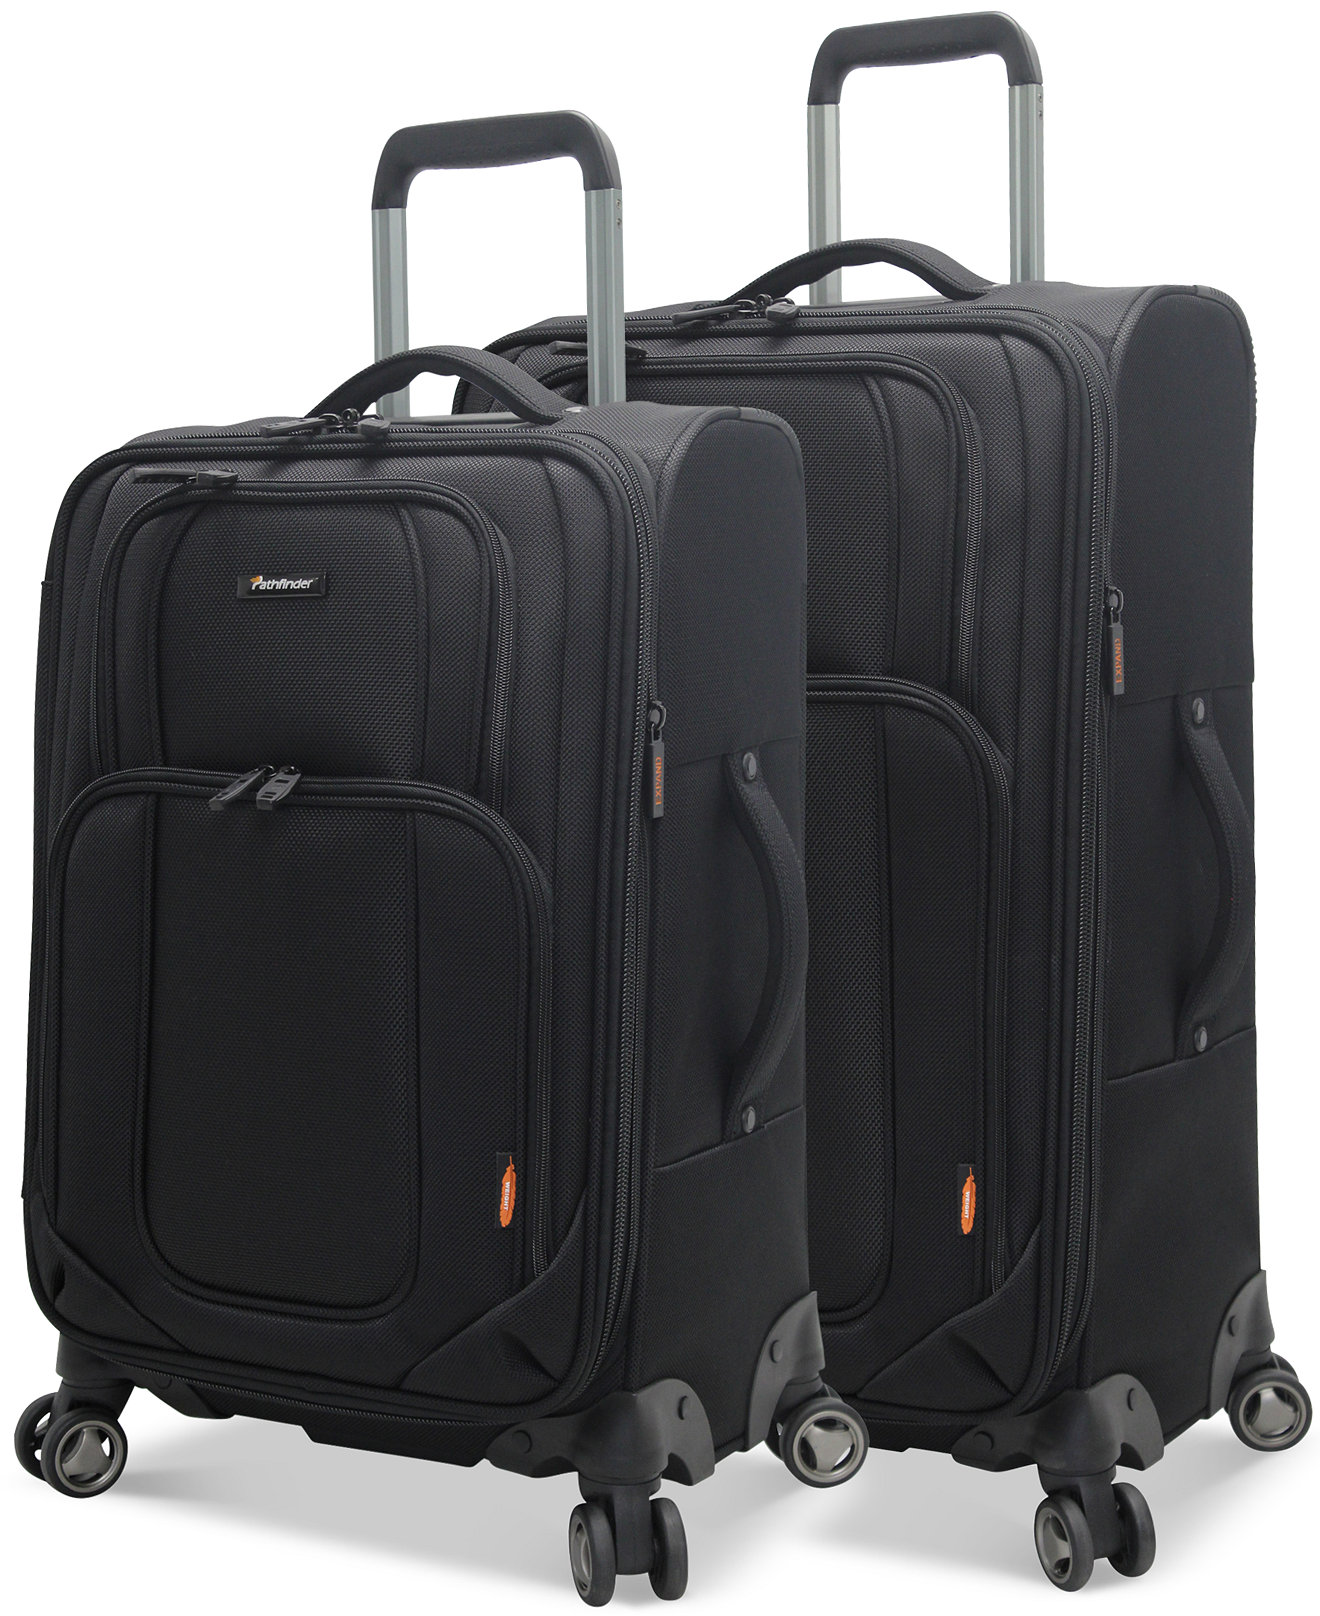 Suitcase Clearance Sale - Mc Luggage